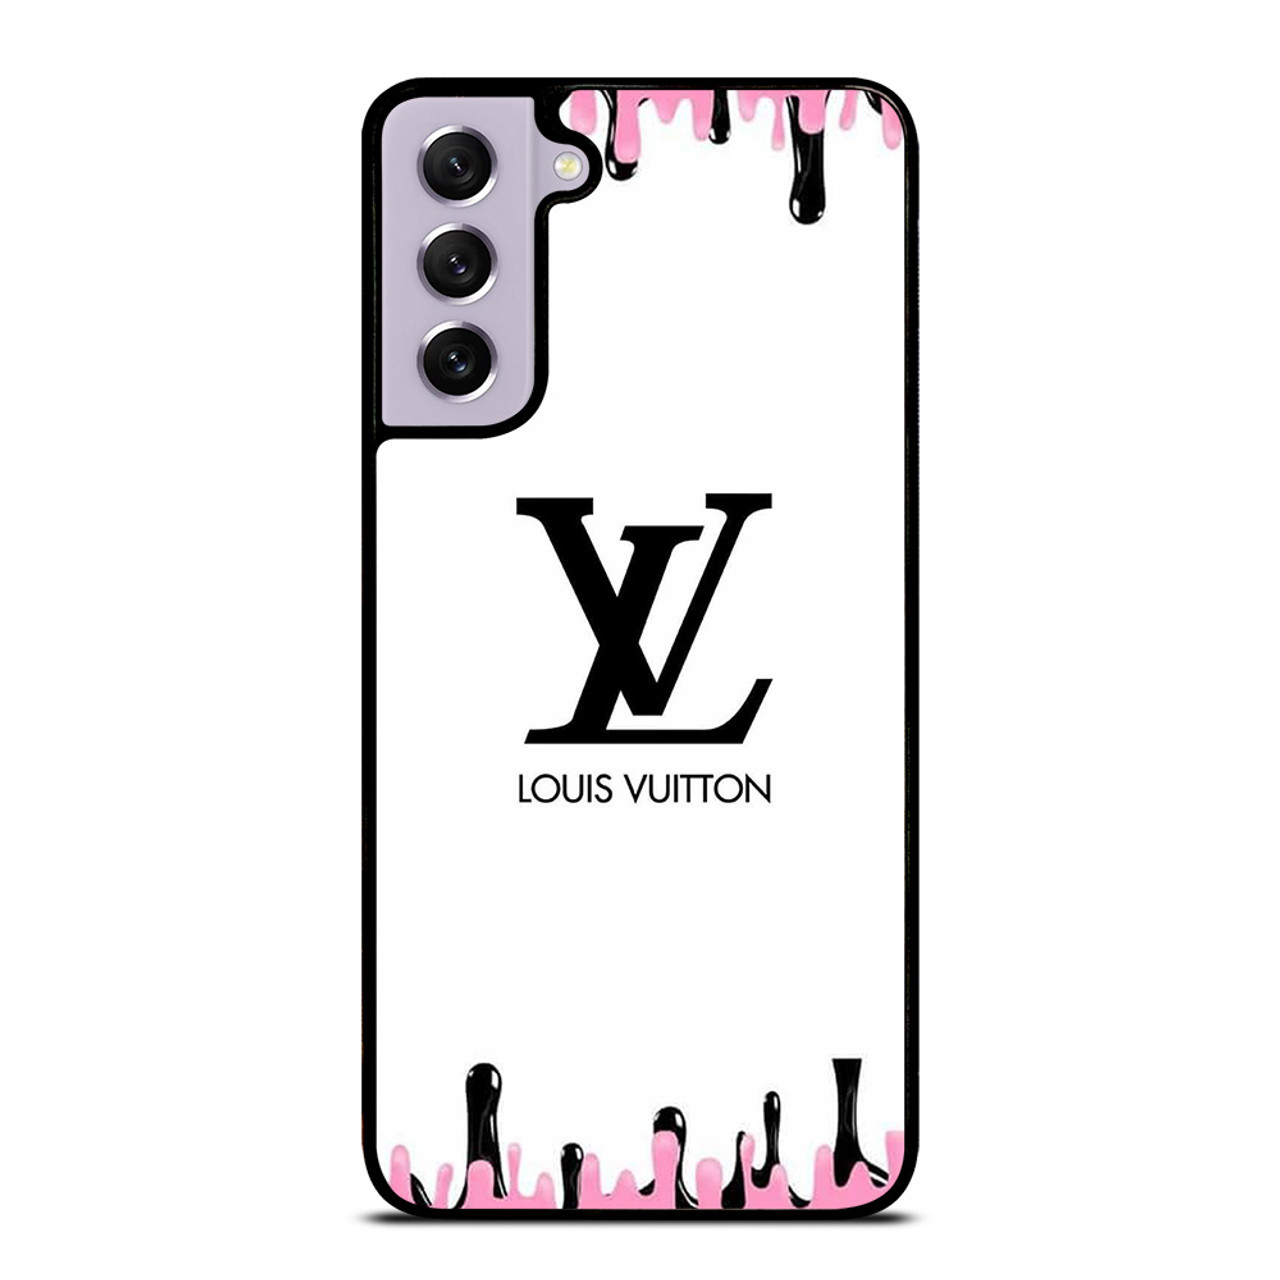 LOUIS VUITTON LV LOGO MELTING iPhone XR Case Cover